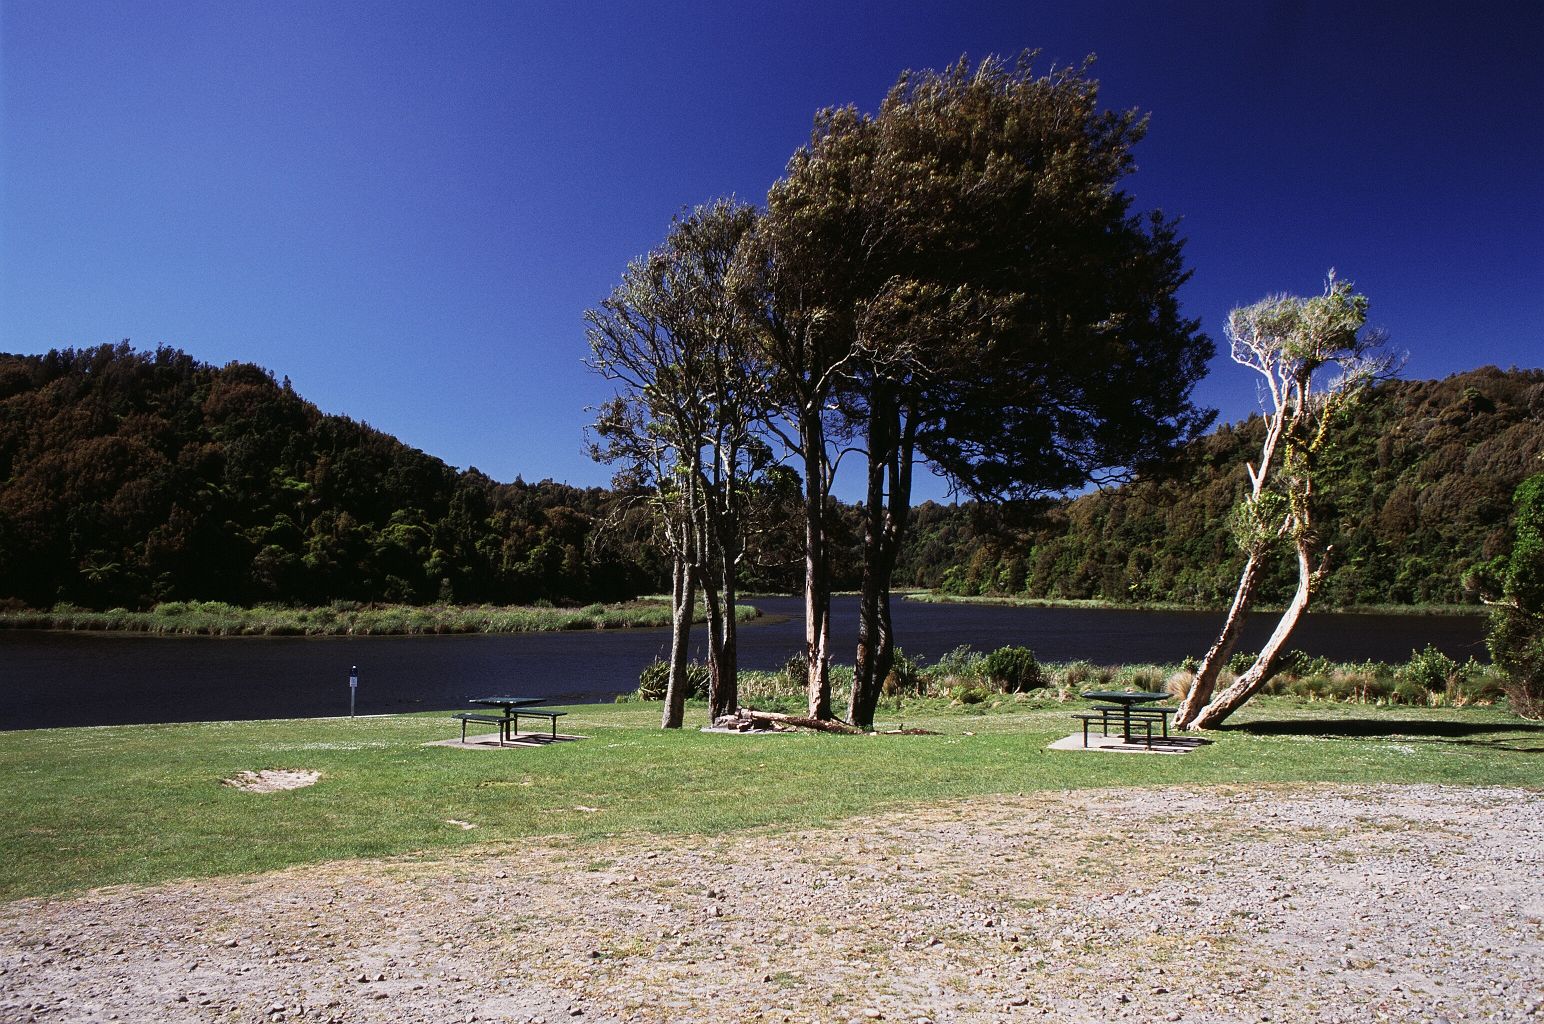 fotka / image jezerni rezervace, z Aucklandu do Wellingtonu